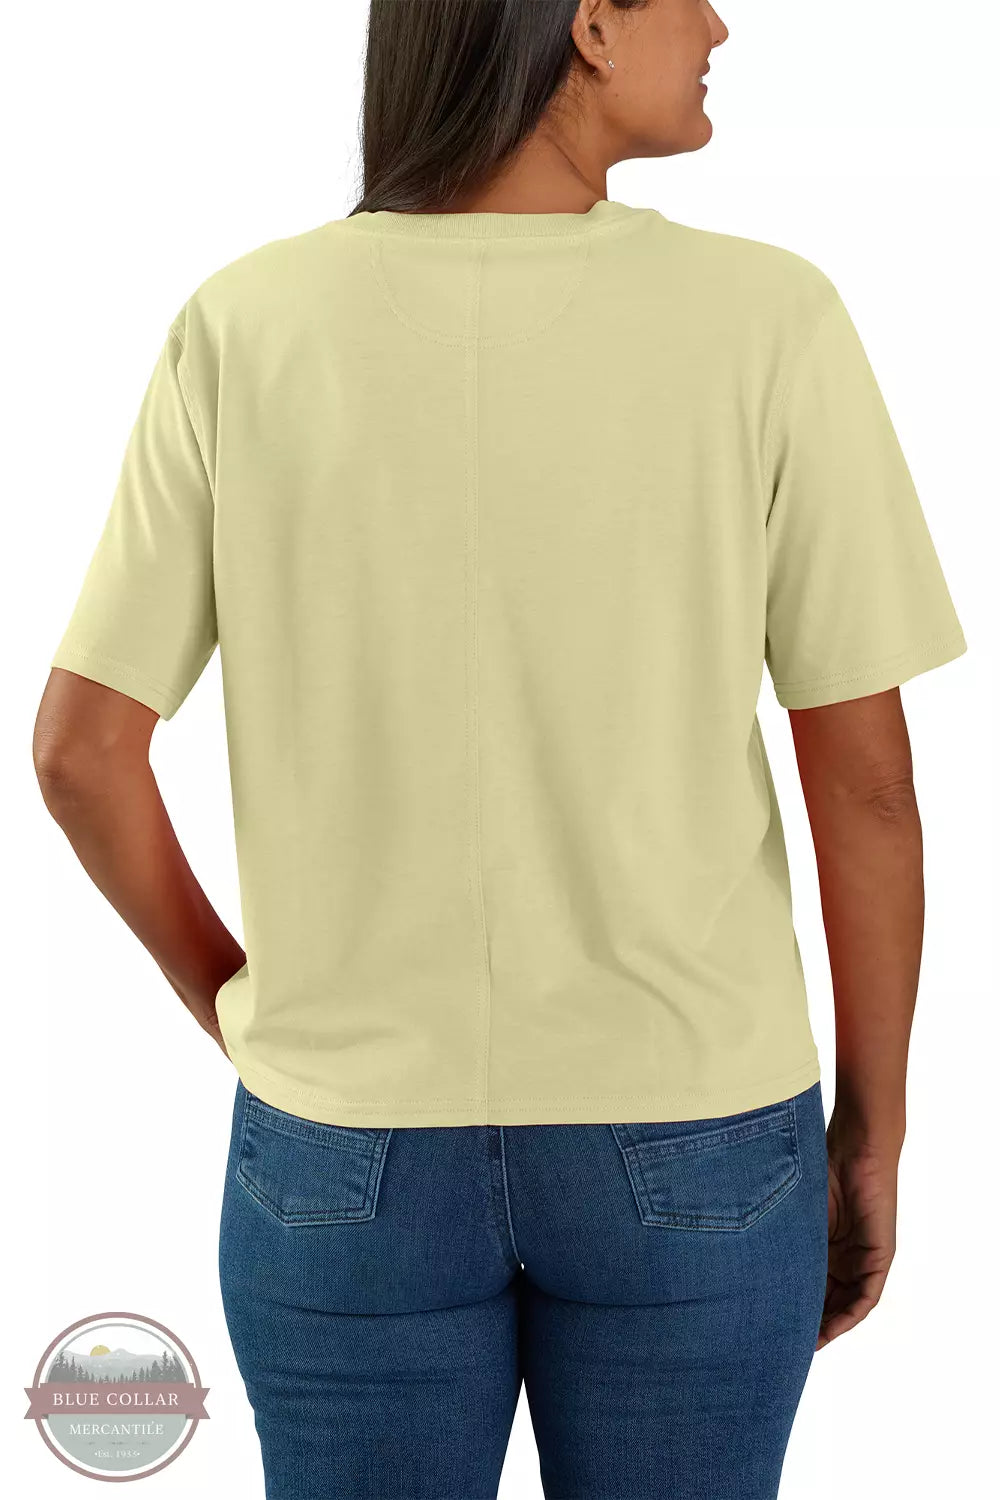 Carhartt 106122 Tencel Fiber Loose Fit Short Sleeve T-Shirt Dried Clay Back View